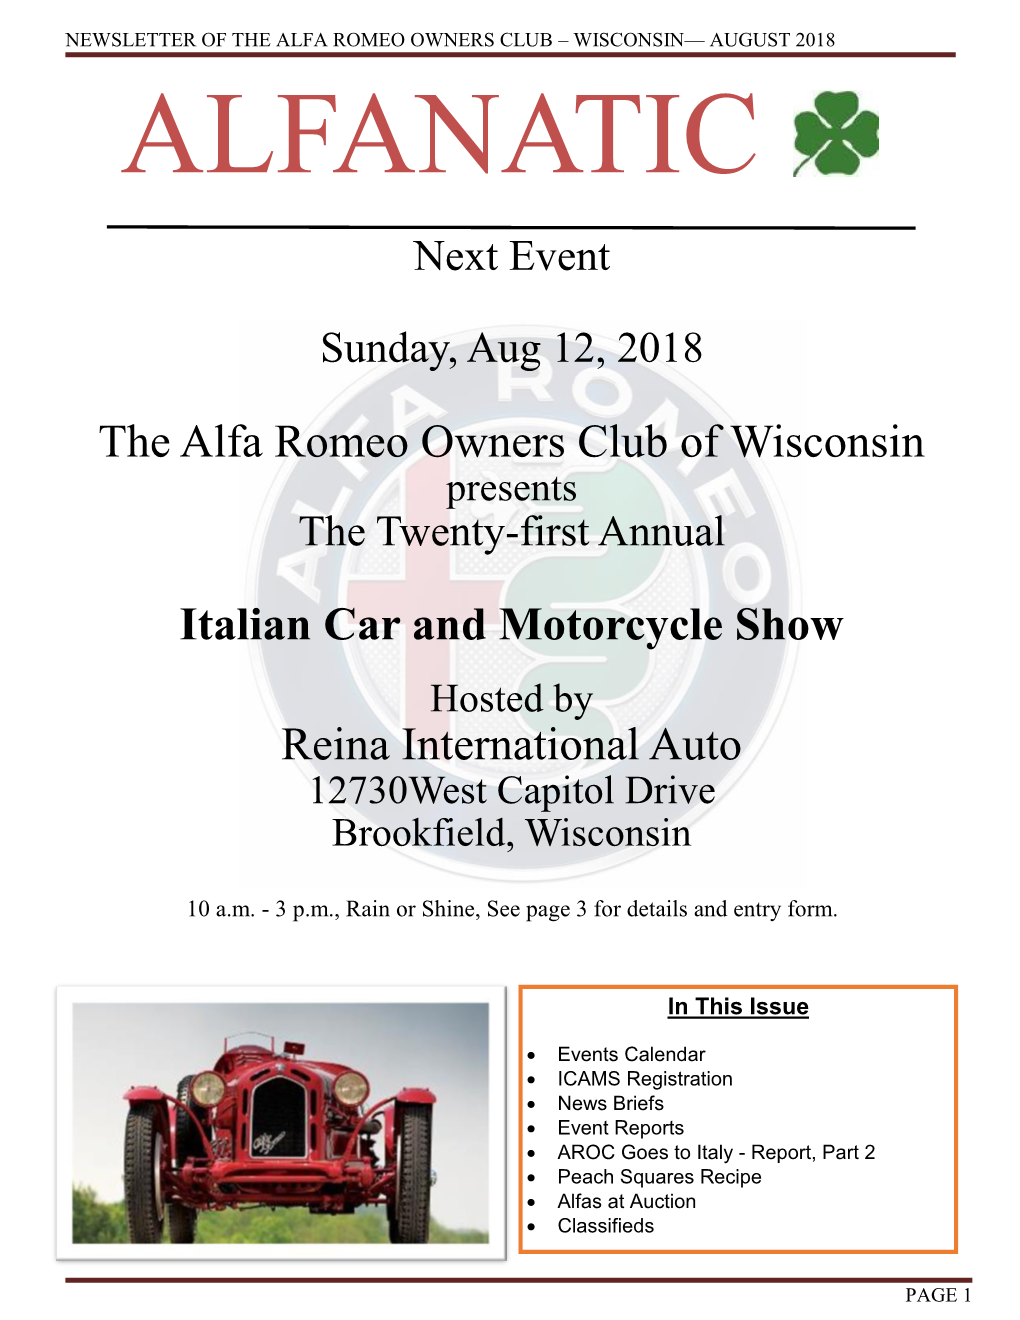 The Alfa Romeo Owners Club of Wisconsin Italian Car And